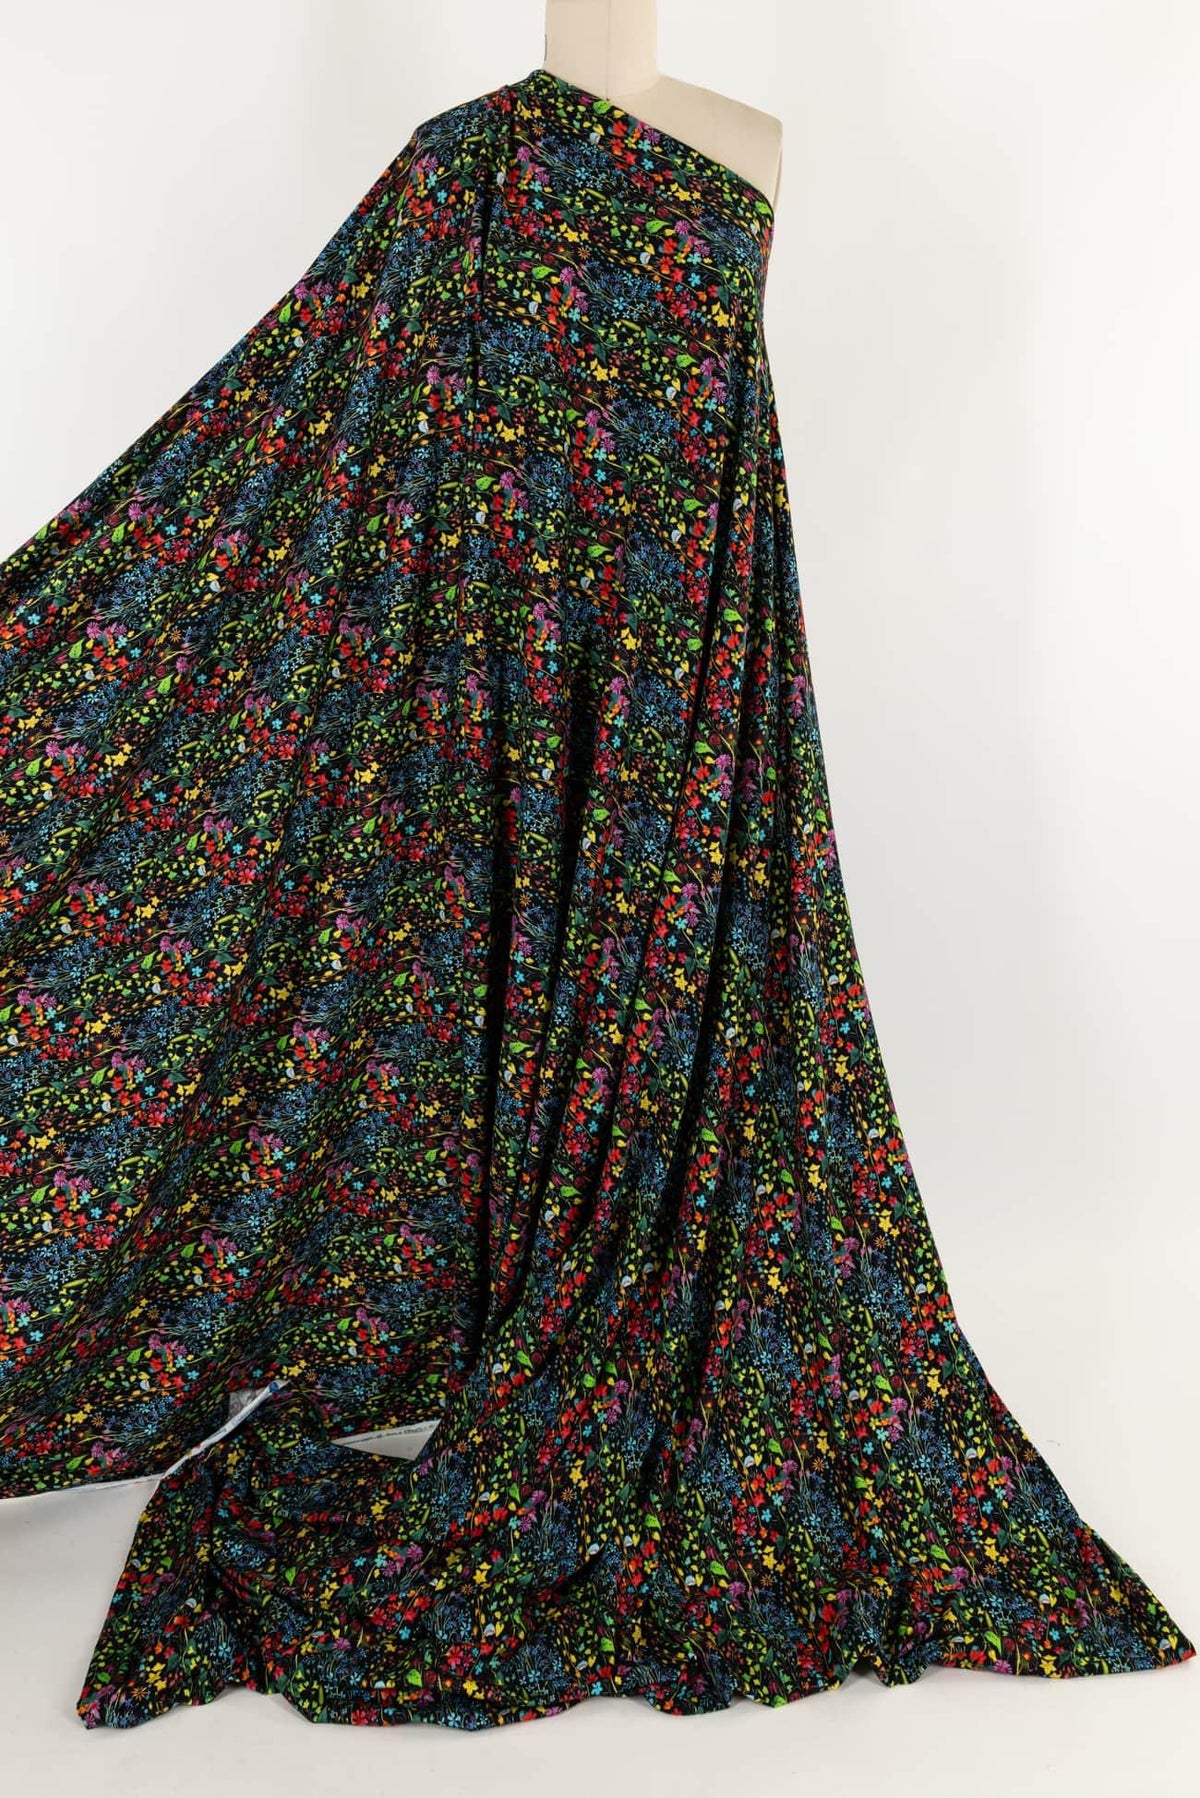 Jardin Cotton/Spandex Knit - Marcy Tilton Fabrics